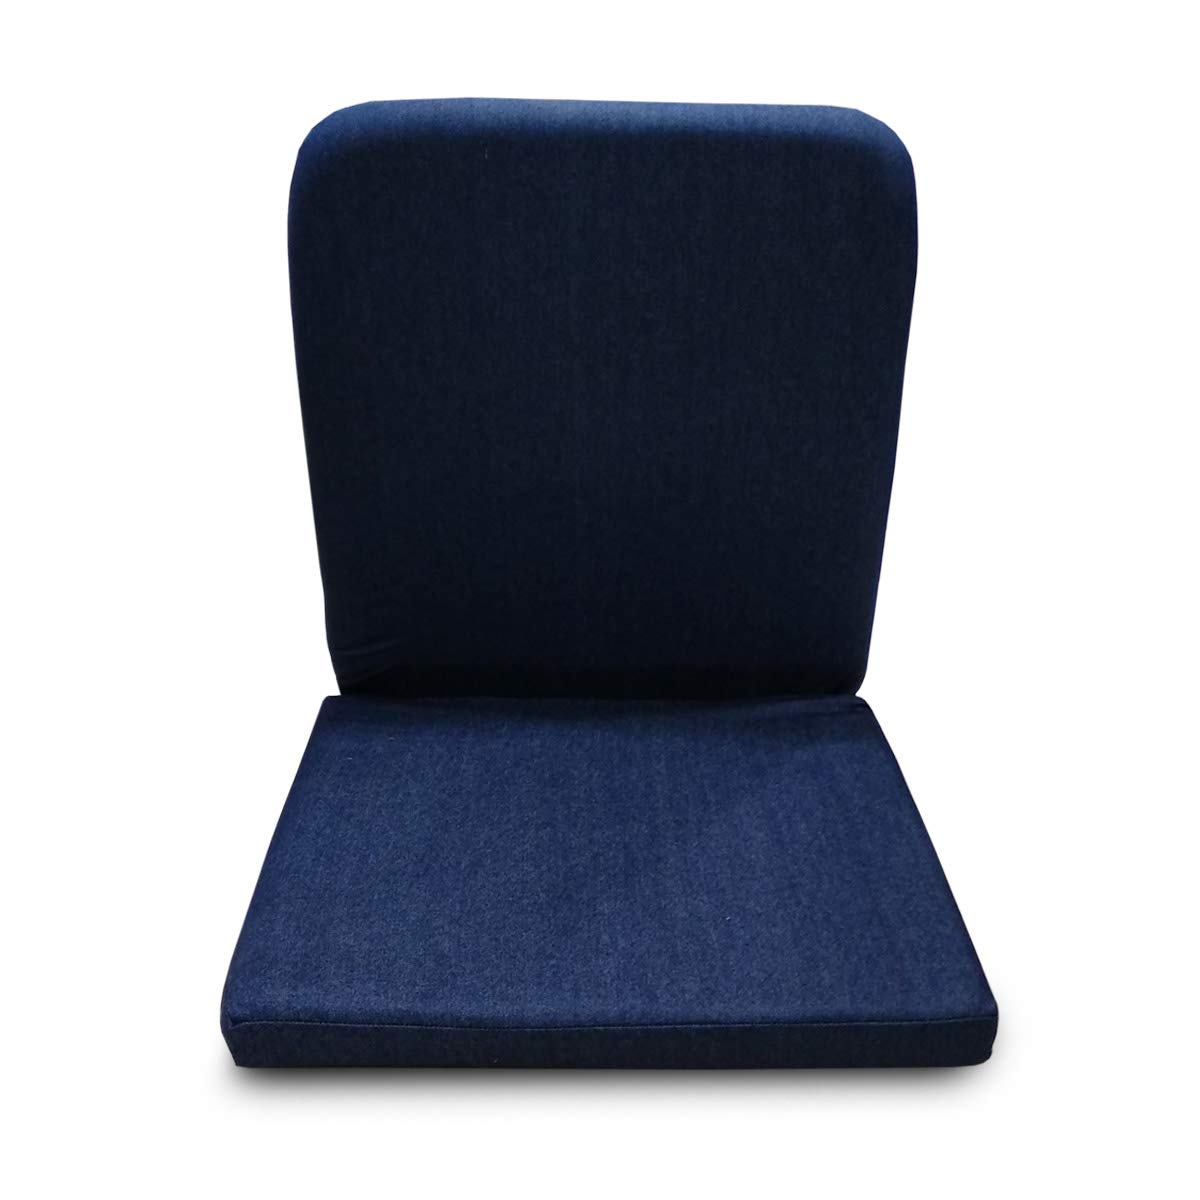 Kumaka Folding Yoga Meditation Chair Right Angle Back Support